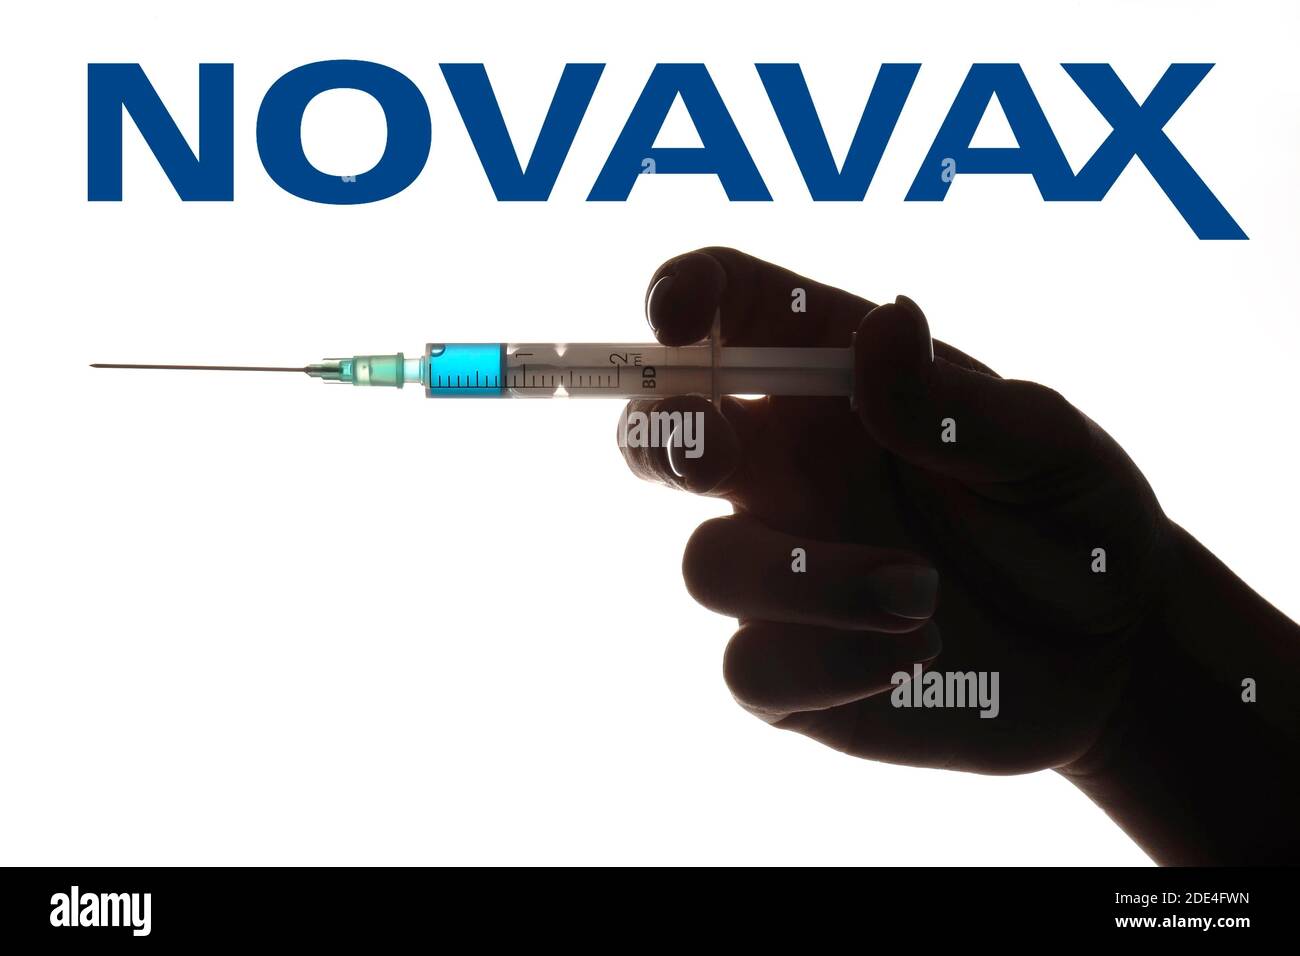 Image symbole vaccin Corona de NOVAVAX, main avec seringue, crise corona, Bade-Wurtemberg, Allemagne Banque D'Images